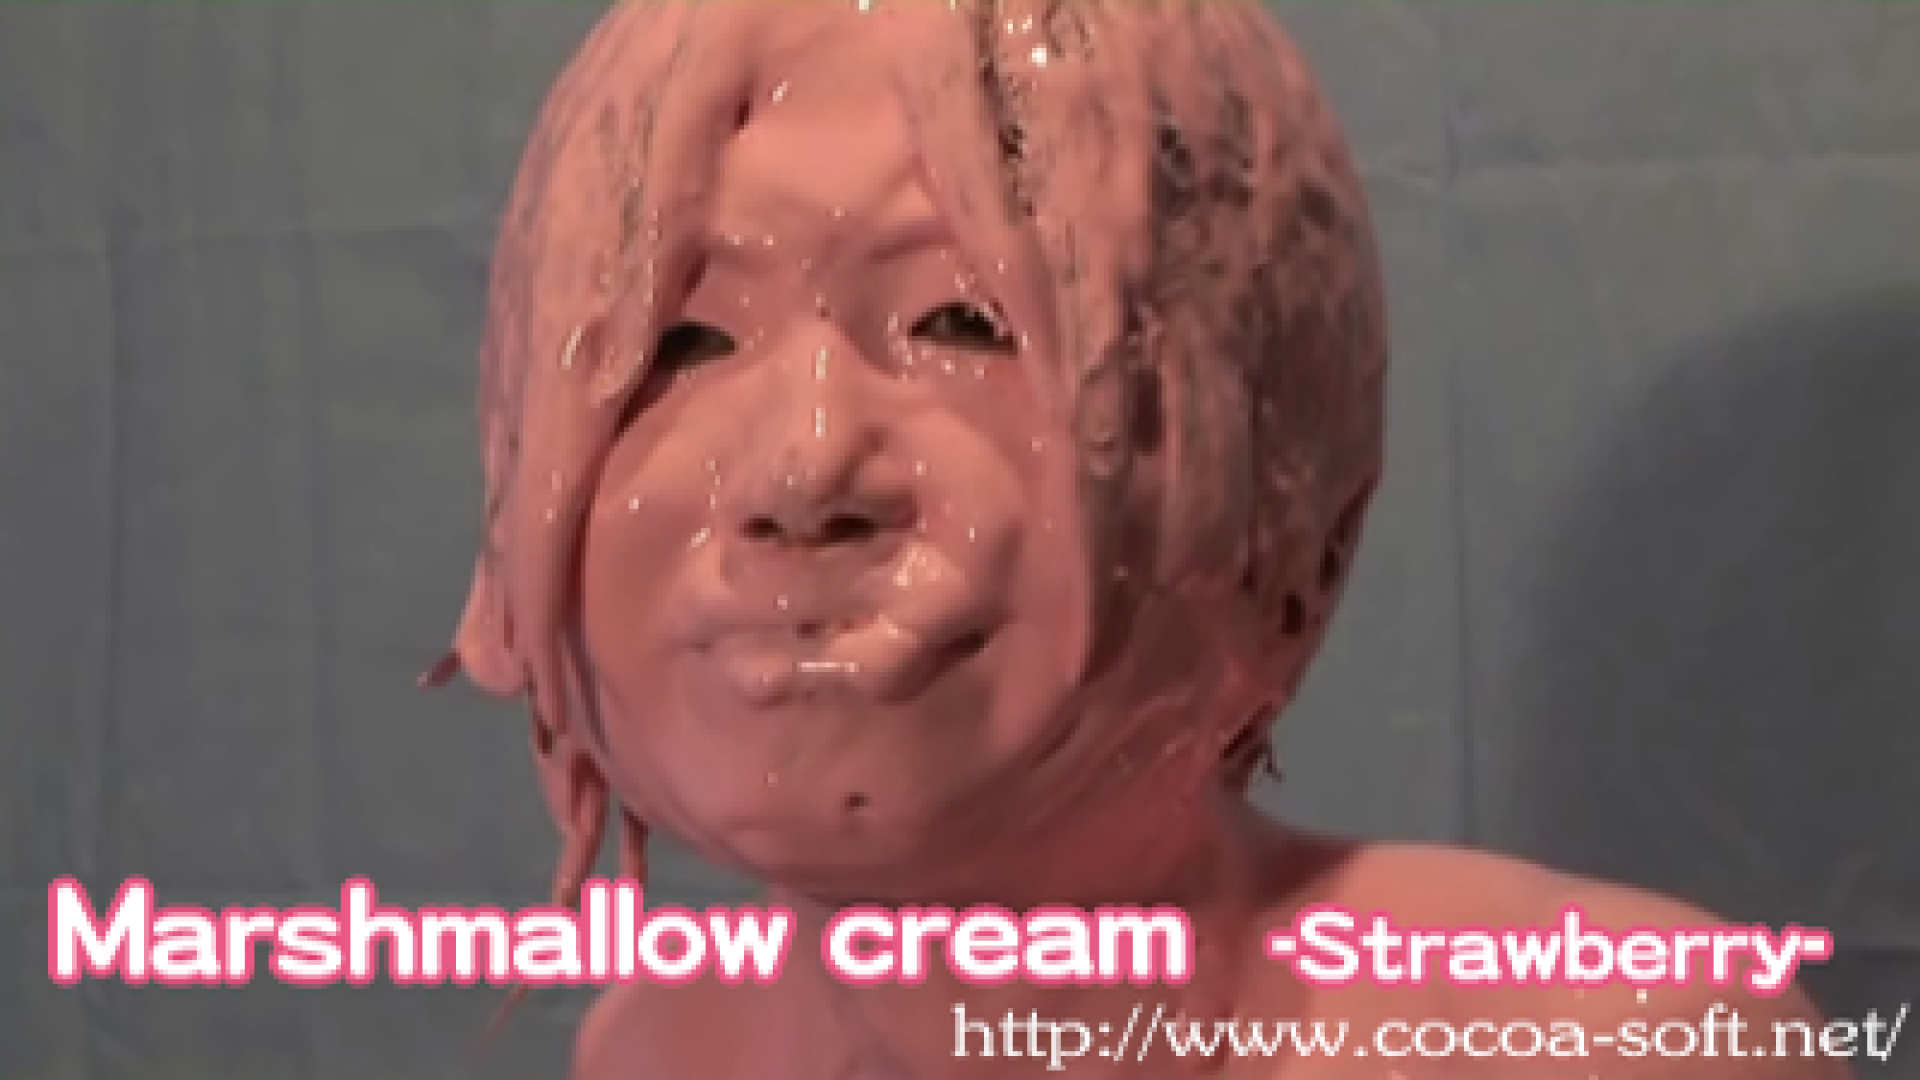 Marshmallow cream -Strawberry-